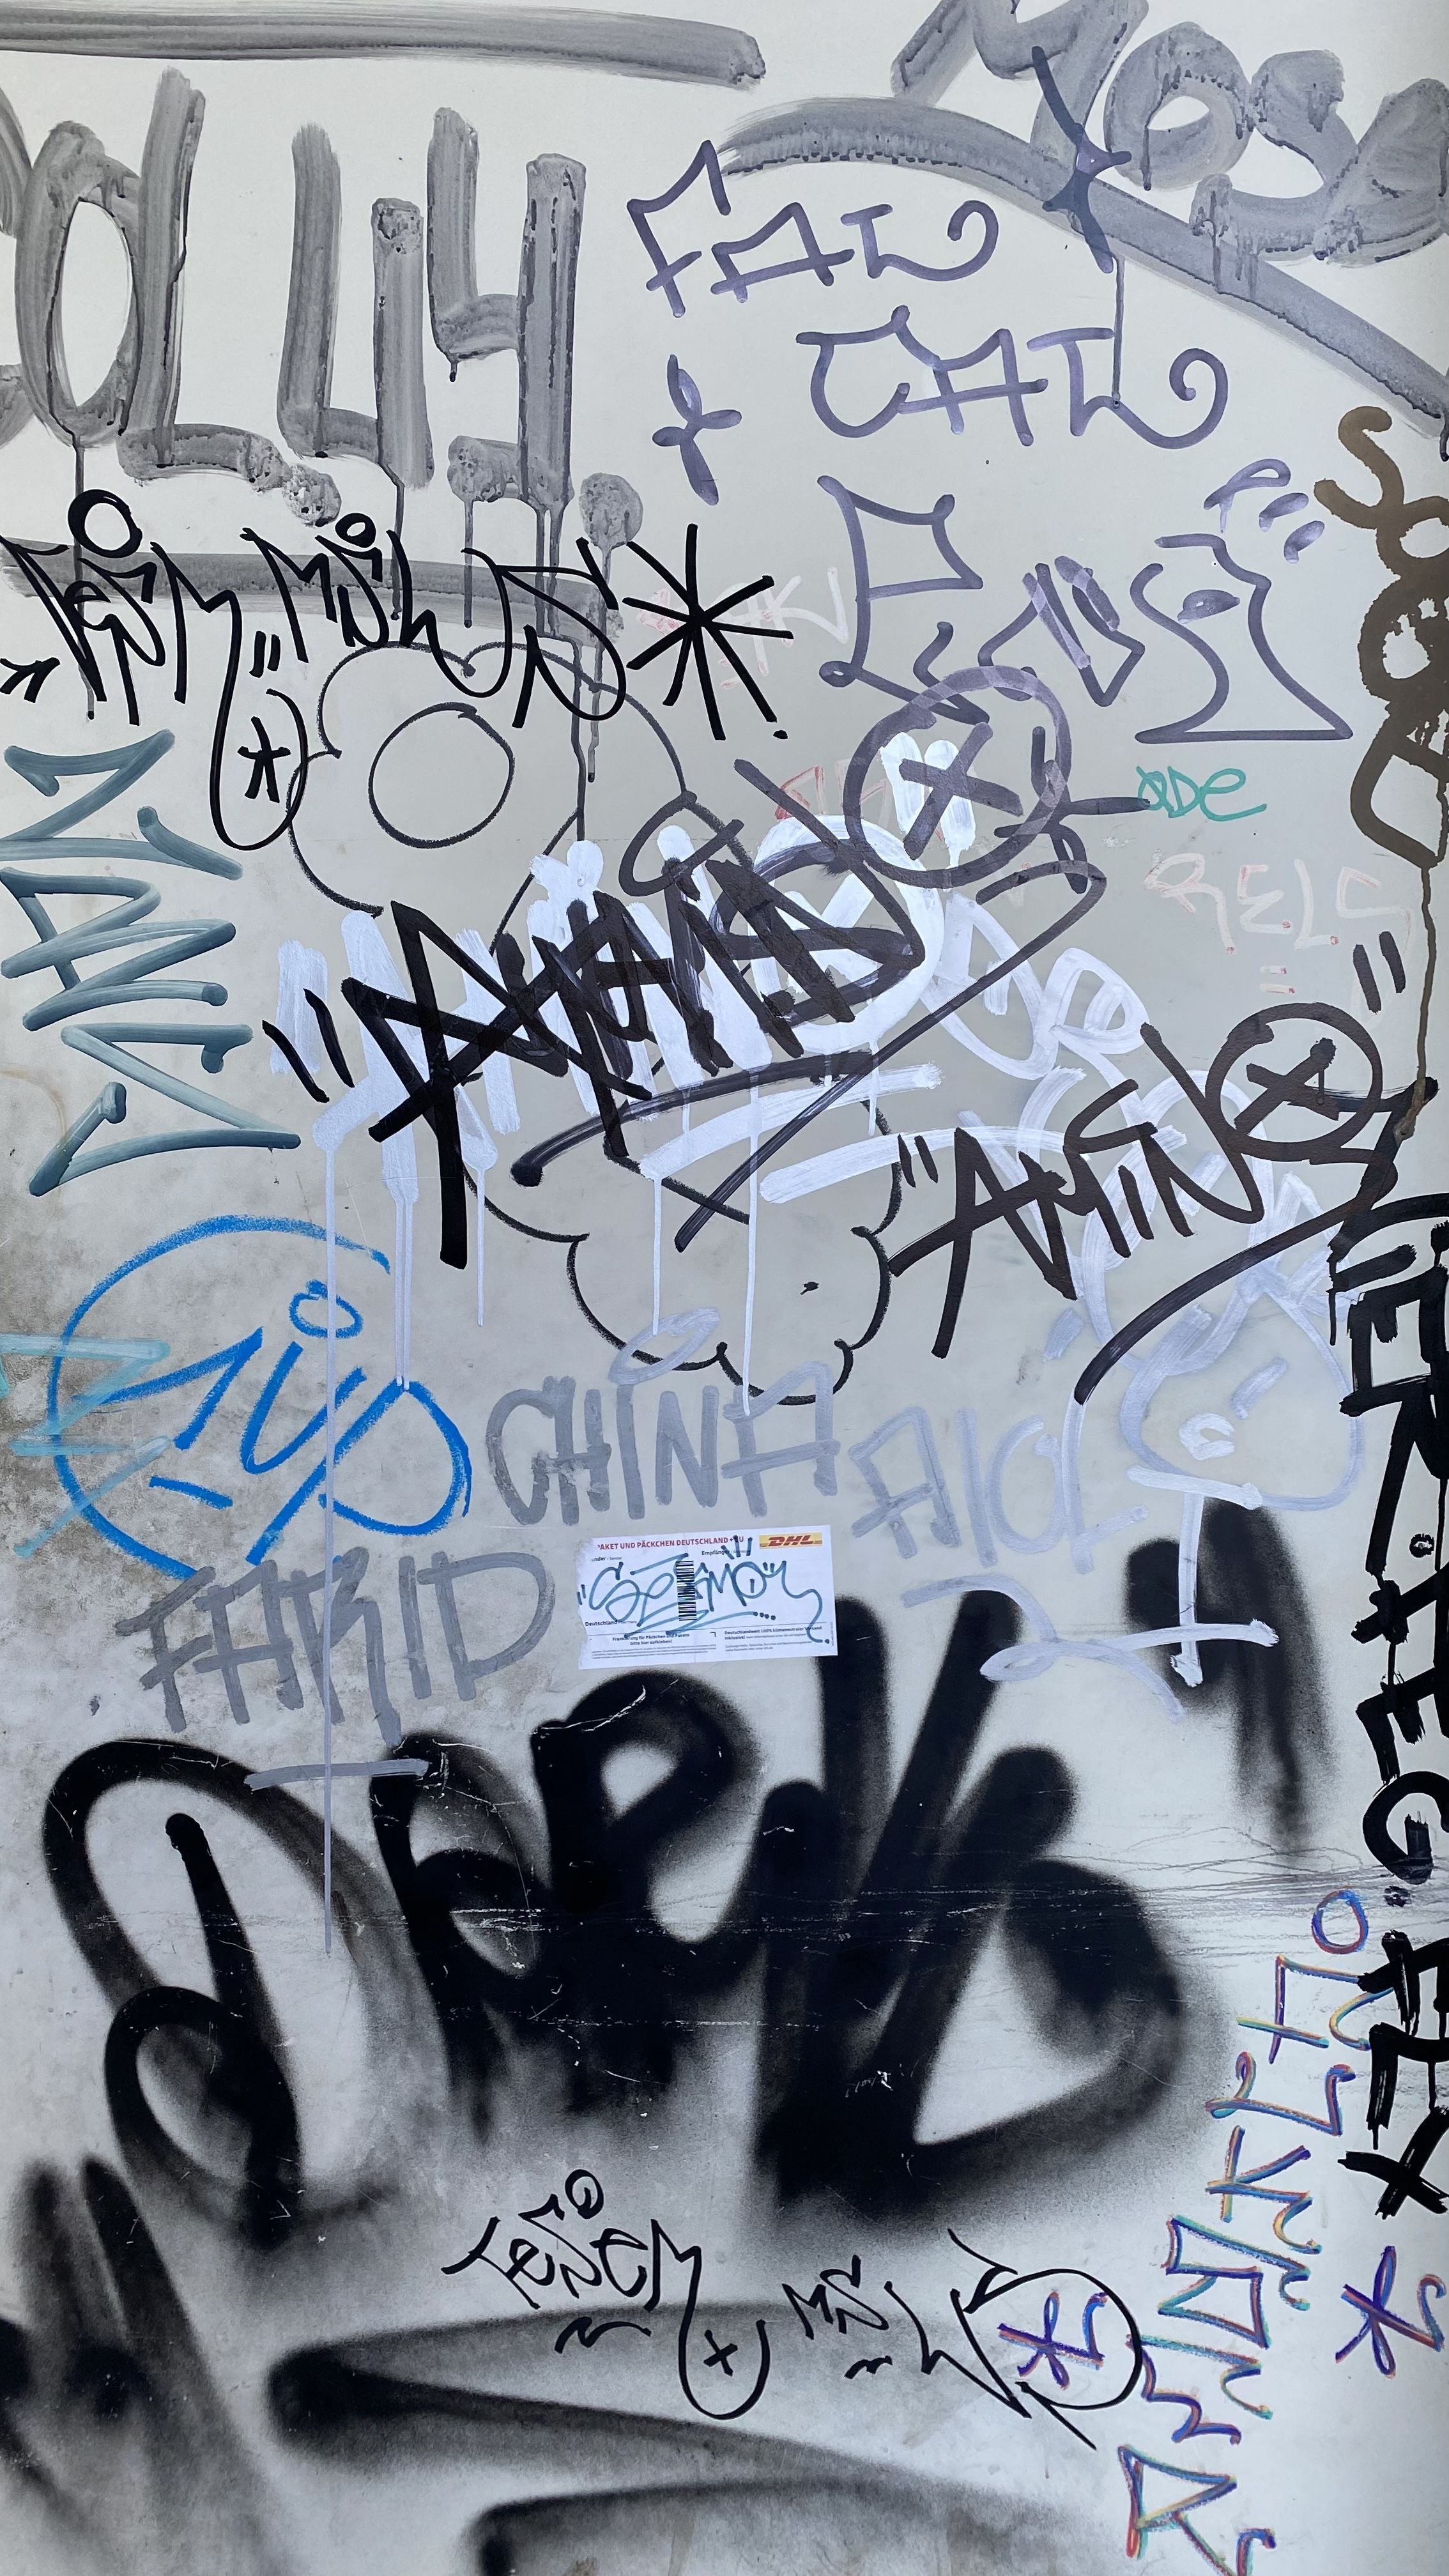 A wall covered in various graffiti tags - Graffiti